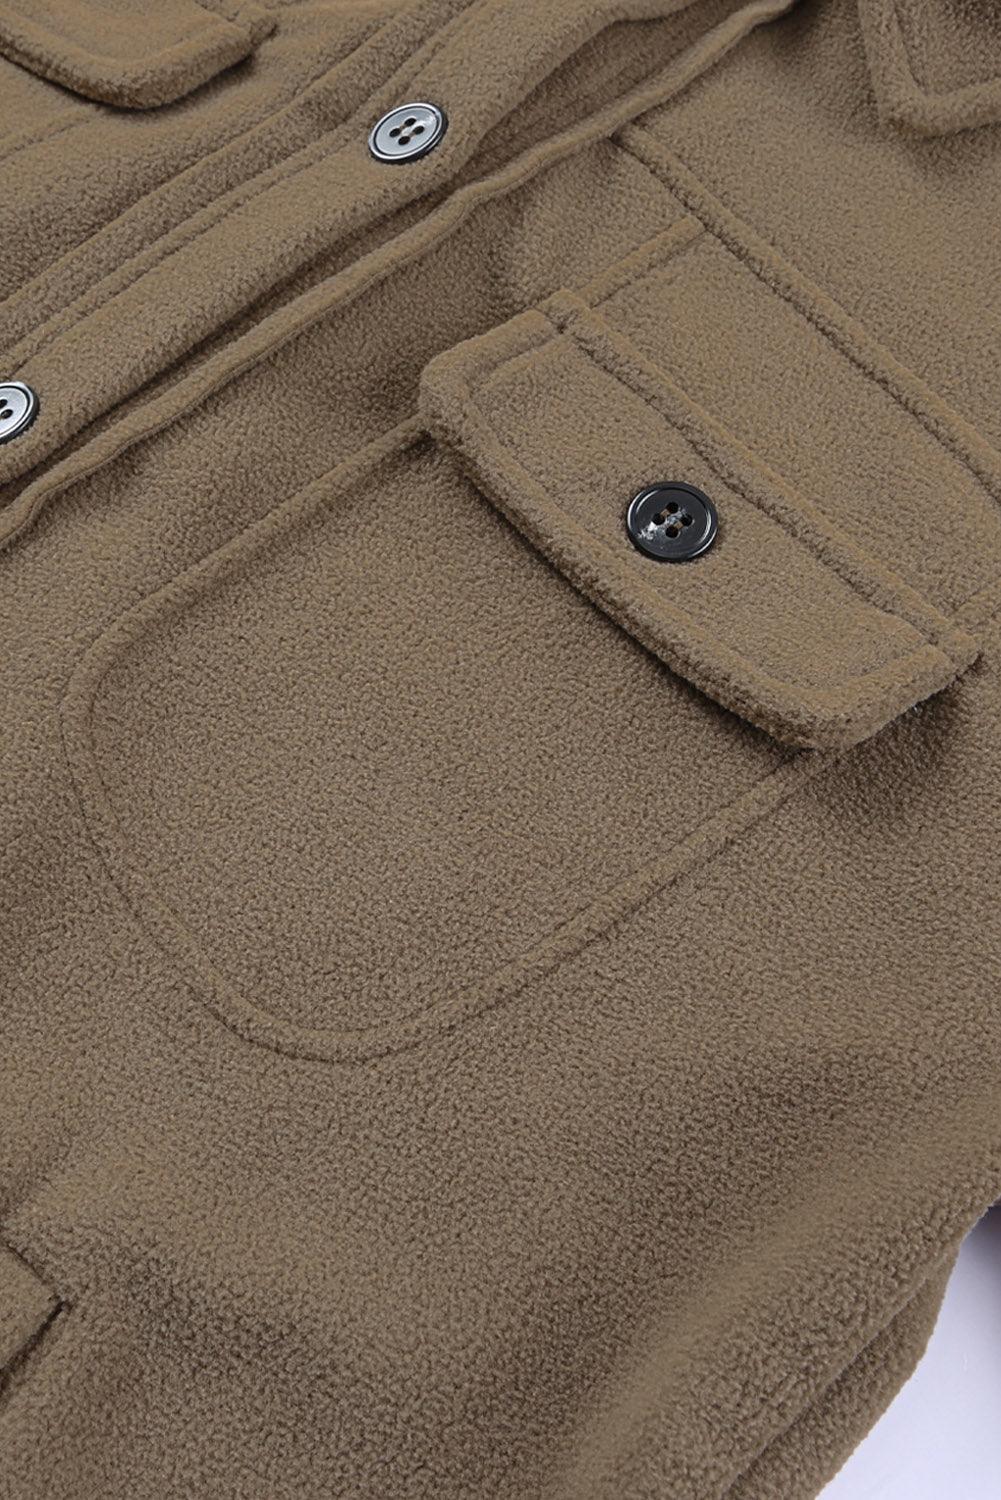 Turn Down Collar Buttoned Shirt Jacket - L & M Kee, LLC